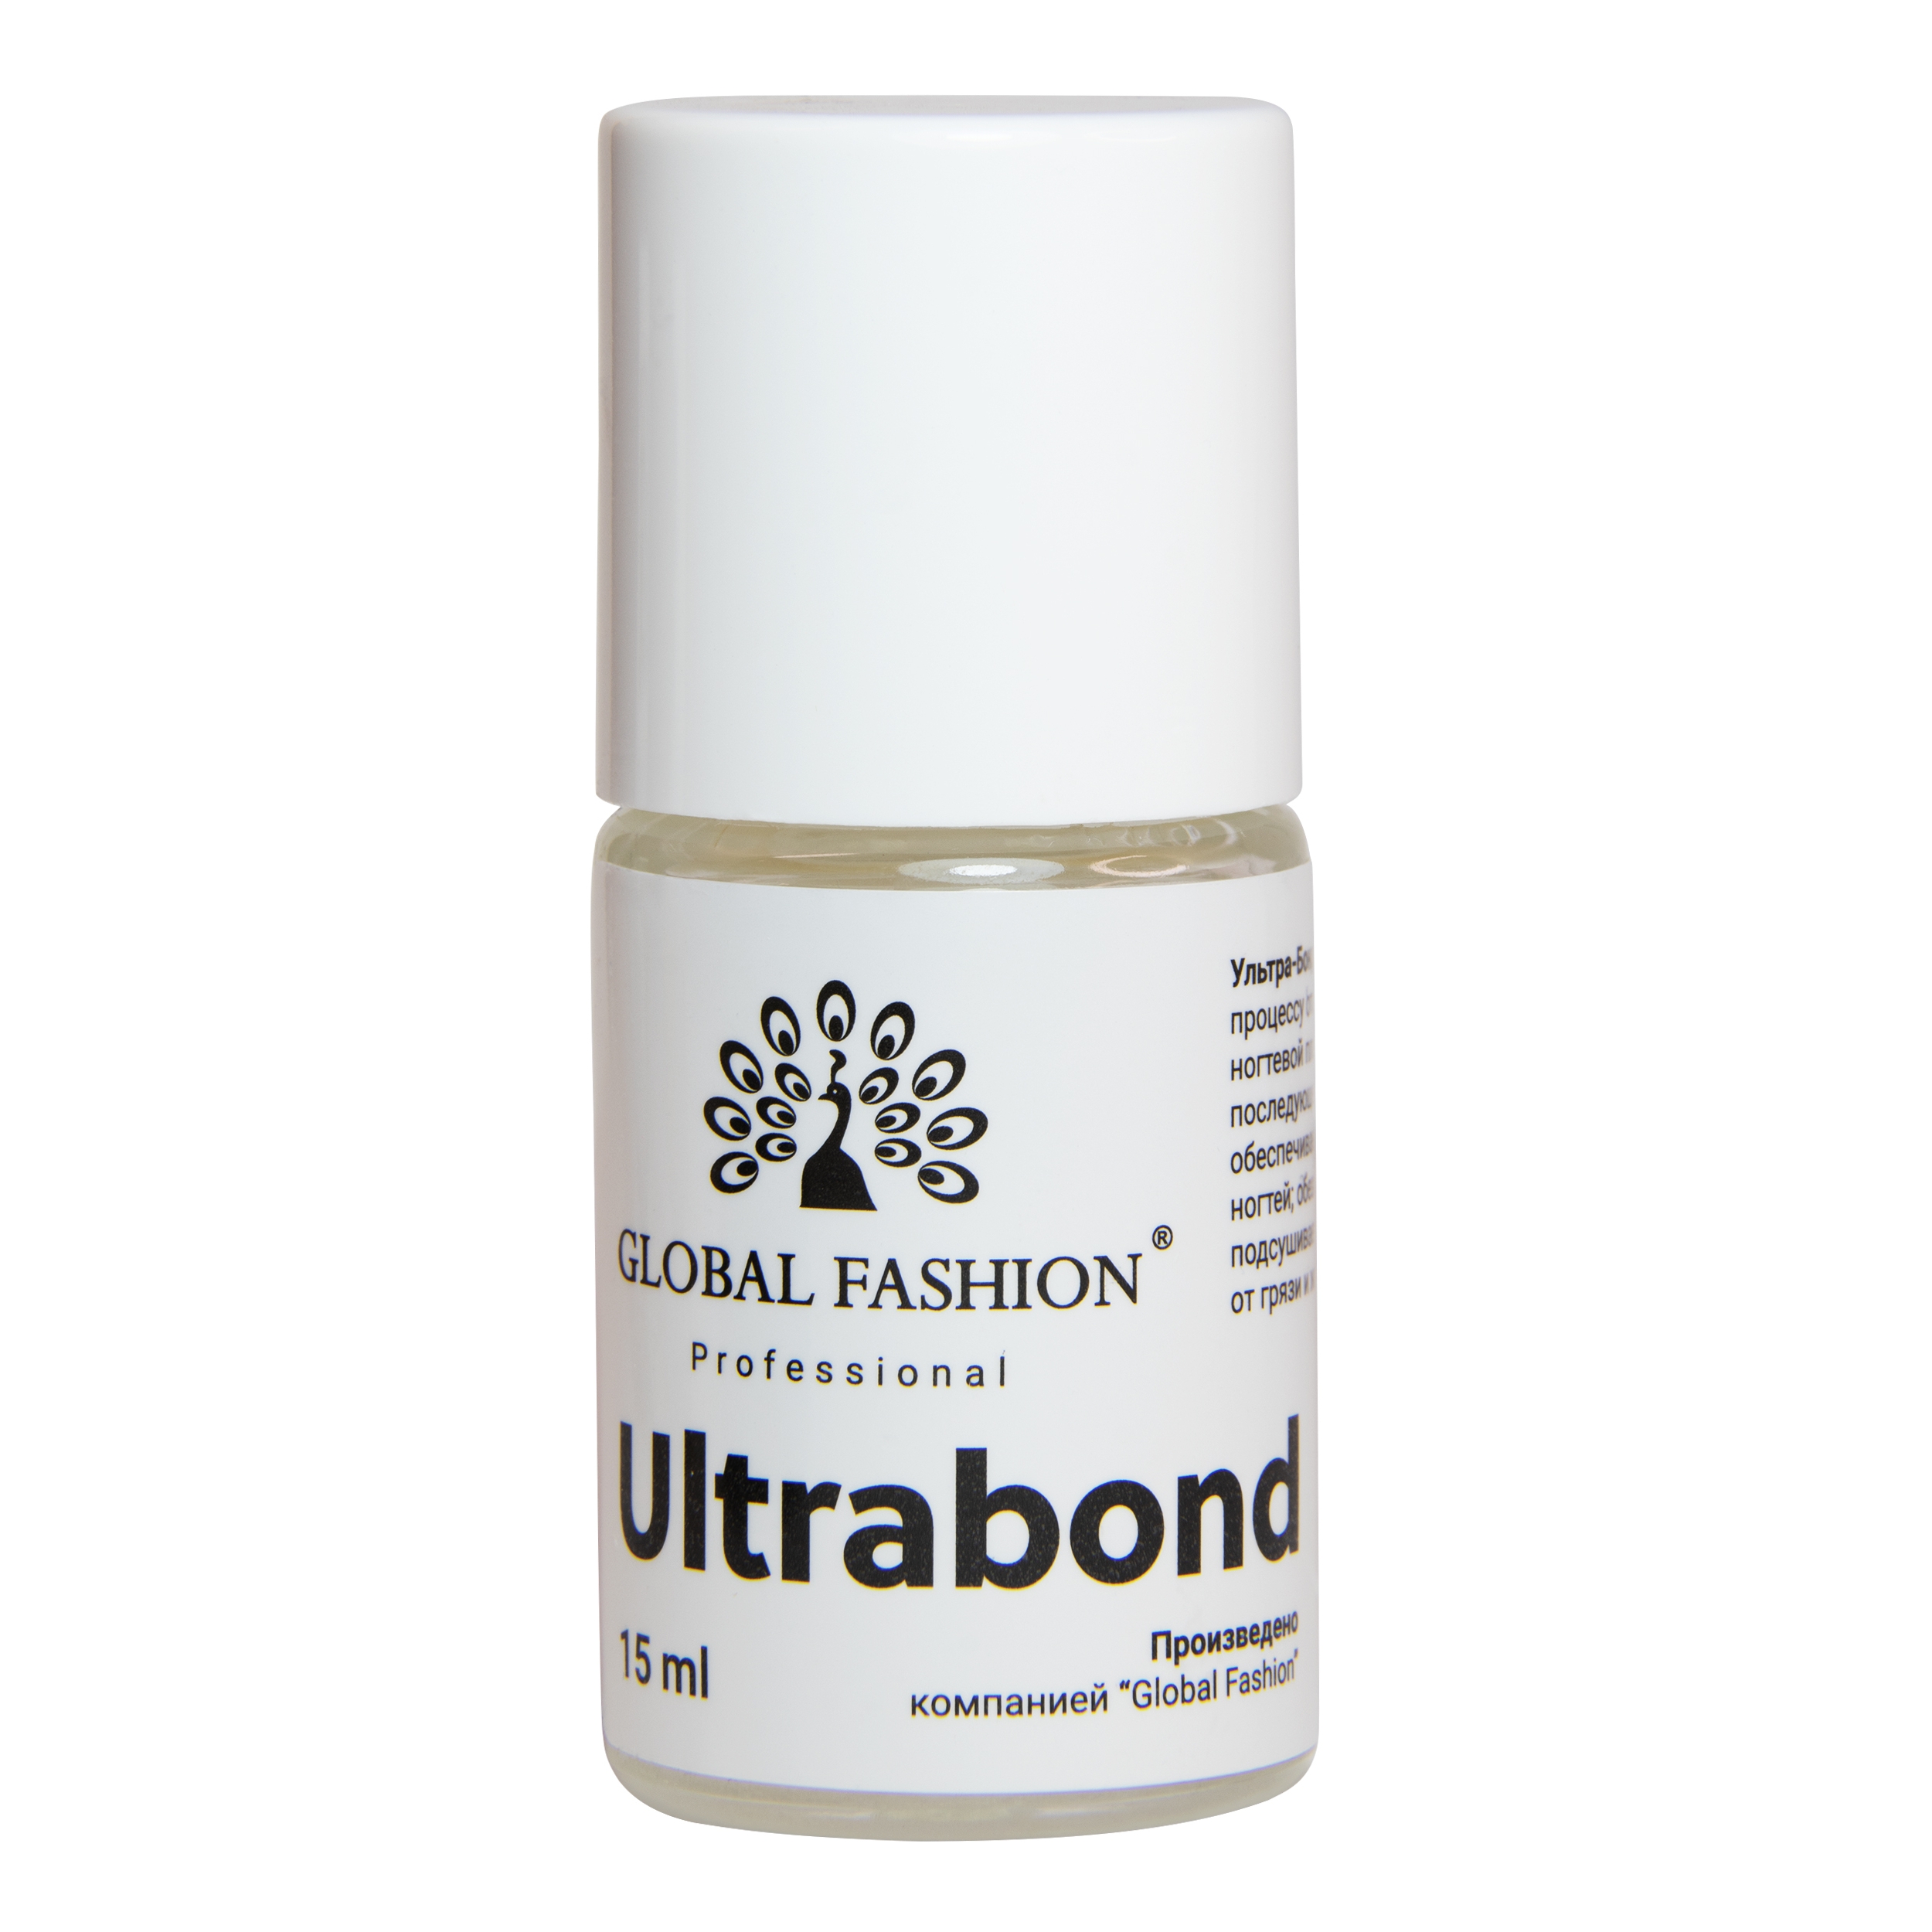 Ogc - Ultrabond (grund fara acid), ultrabond global fashion 15 ml